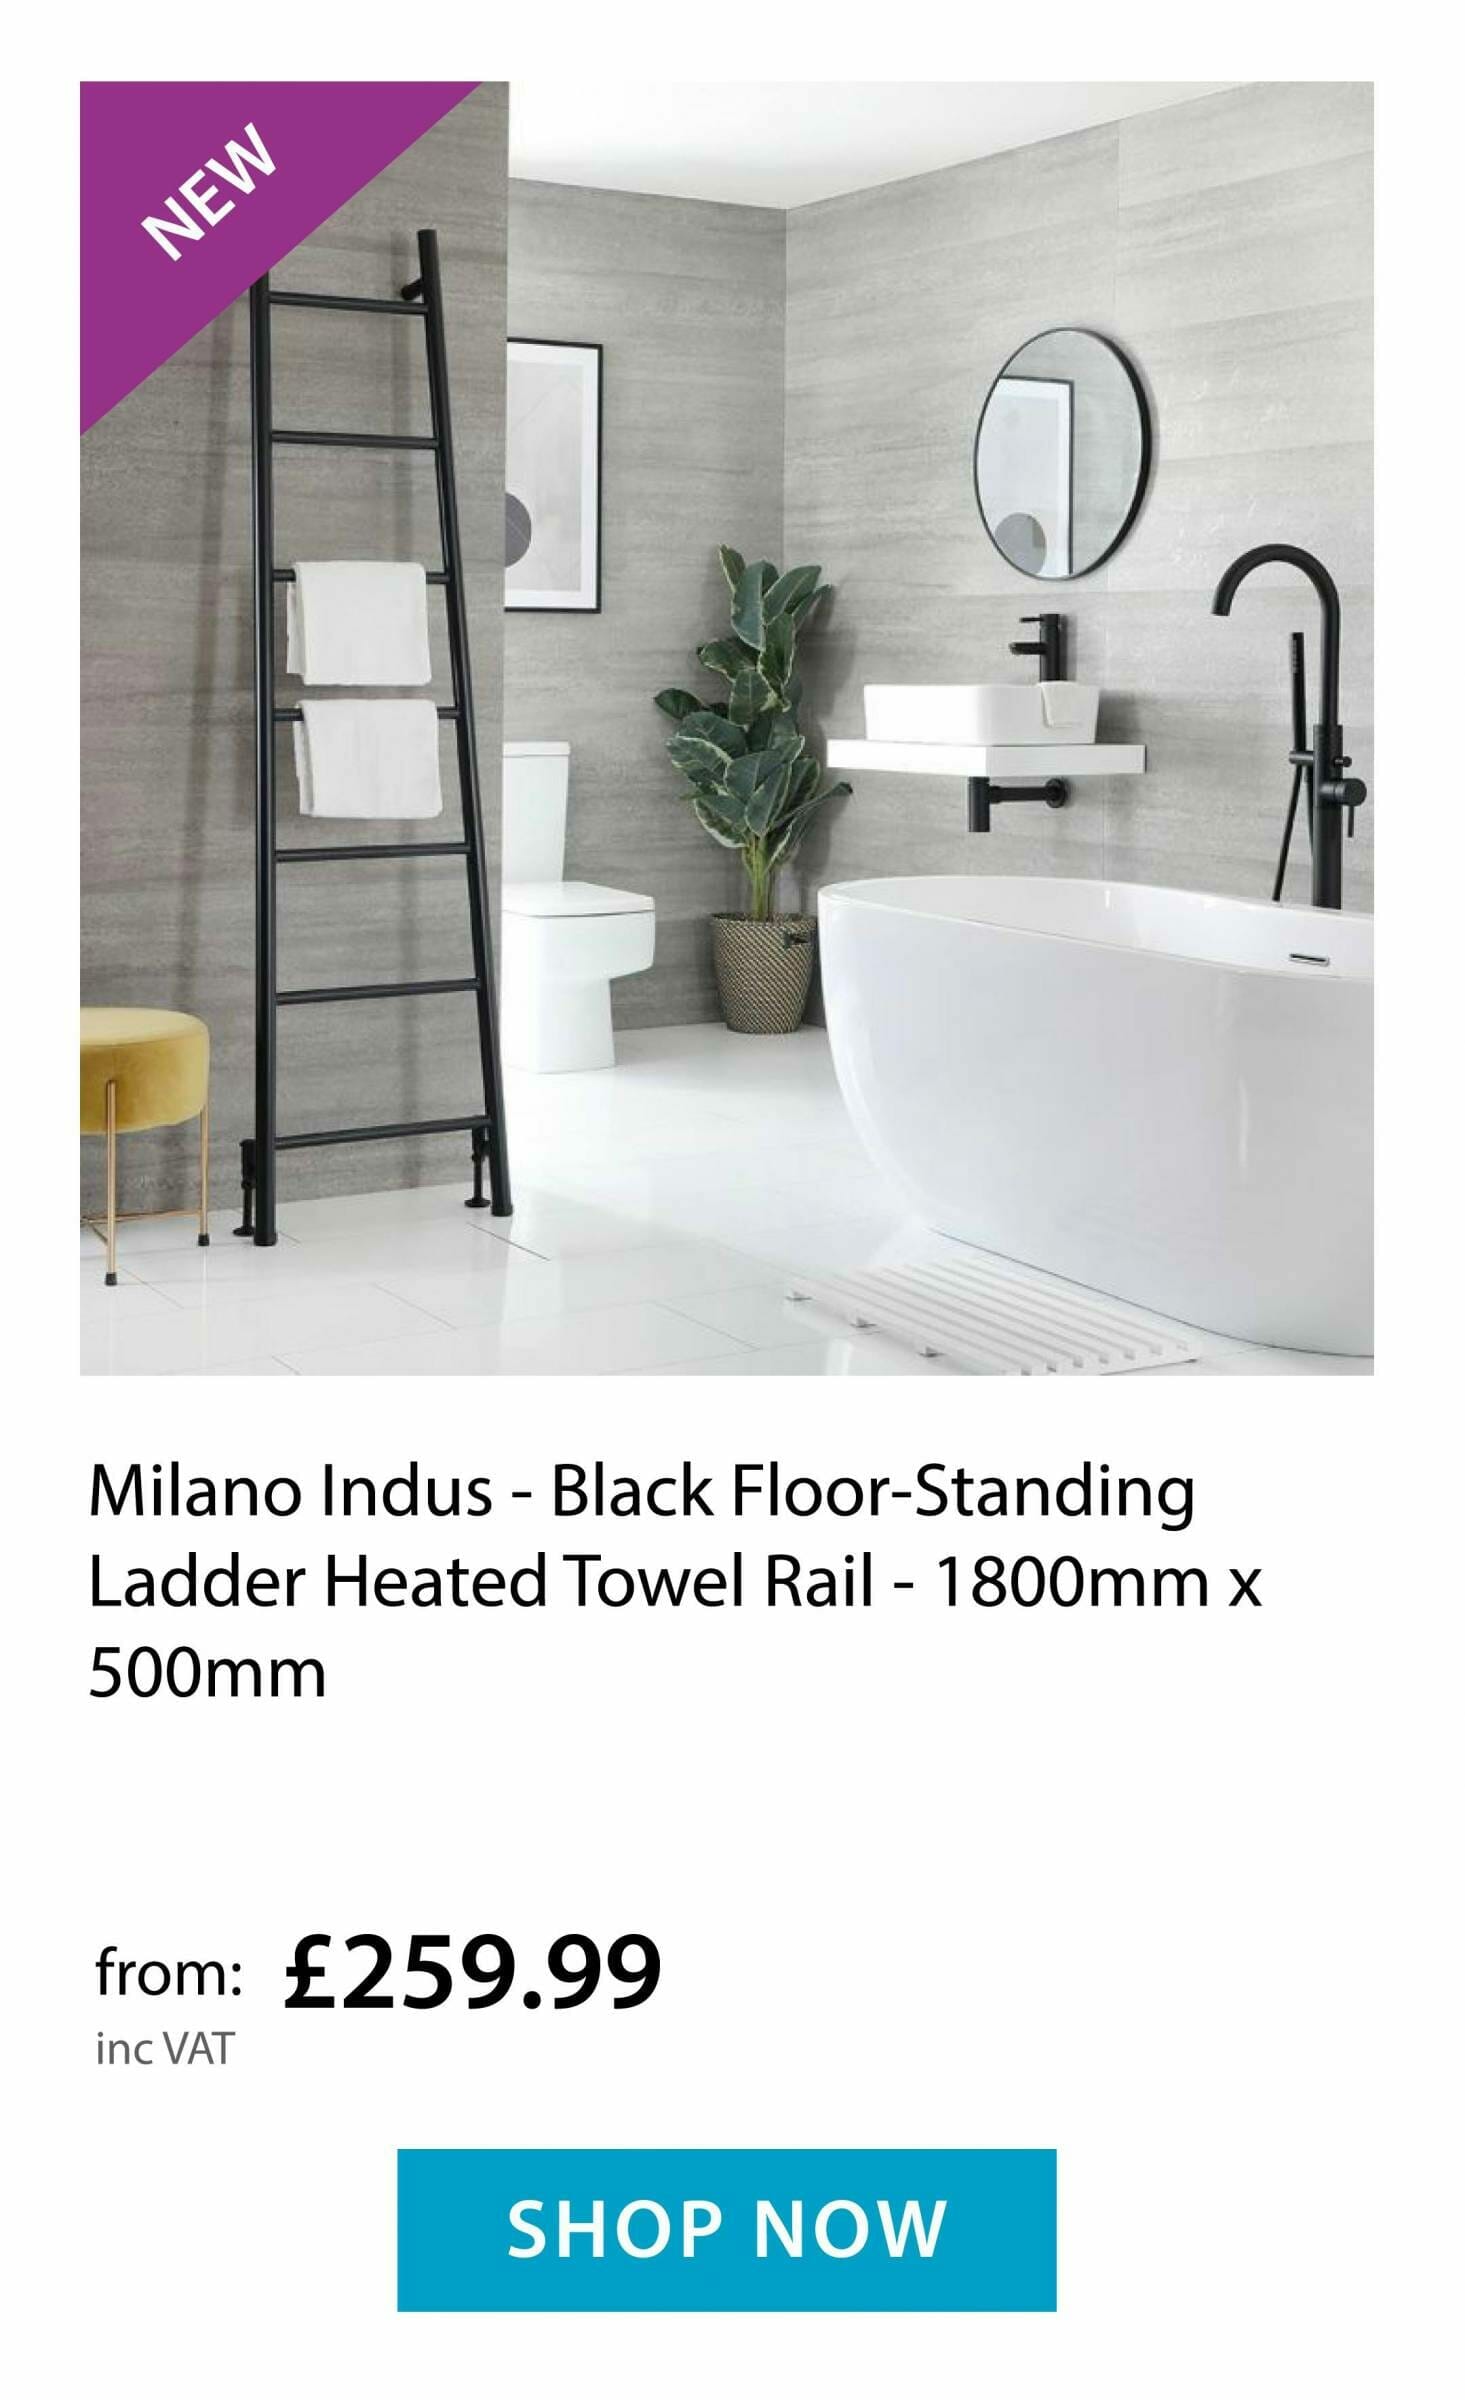 Milano Indus - Heated Towel Ladder Rail